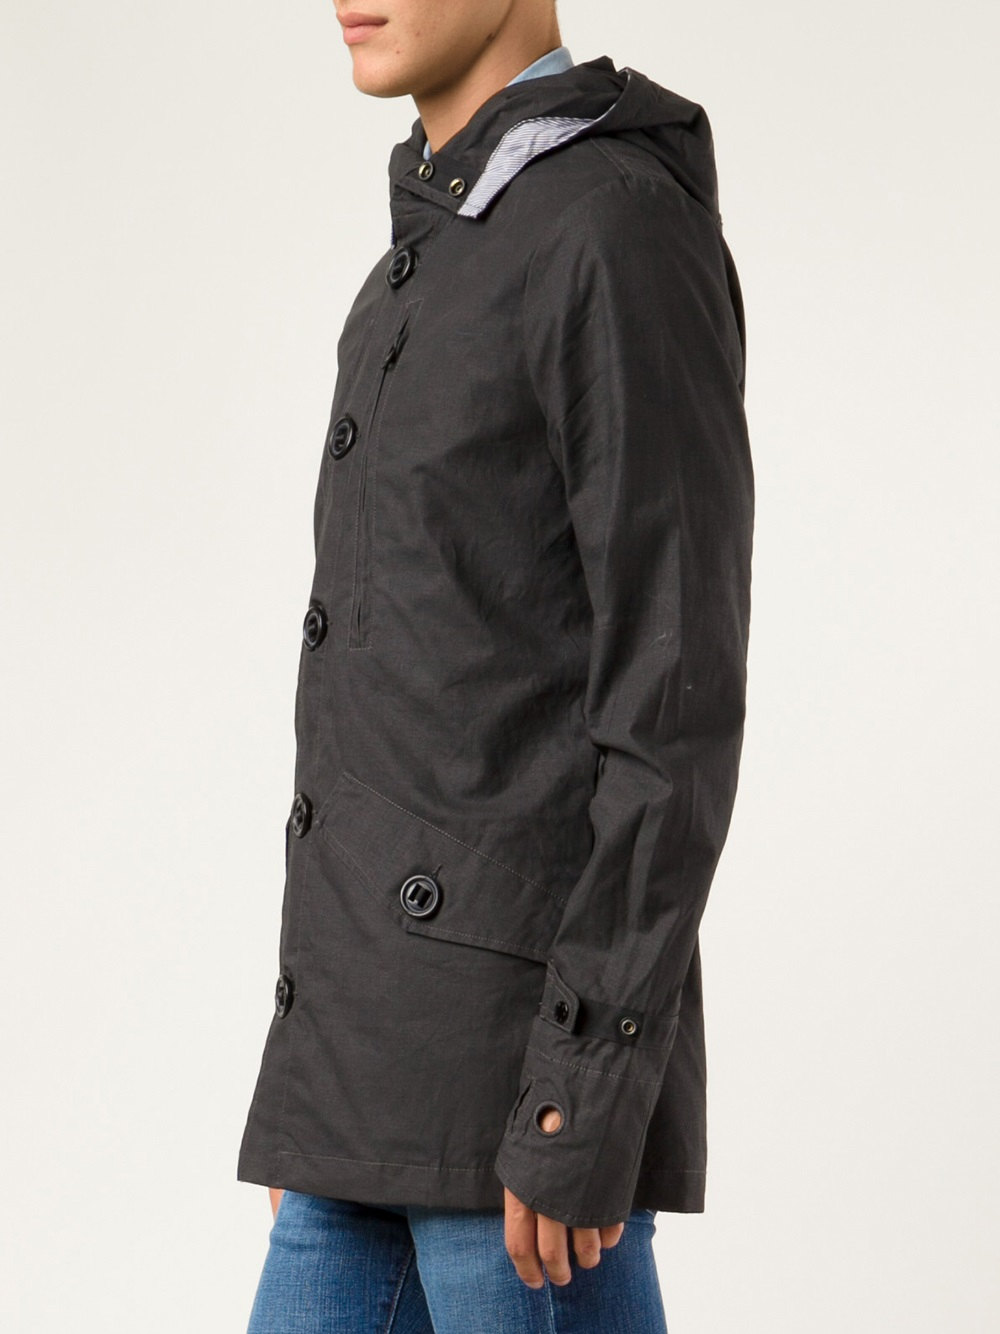 Denham 'Midway' Jacket in Grey (Gray) for Men - Lyst